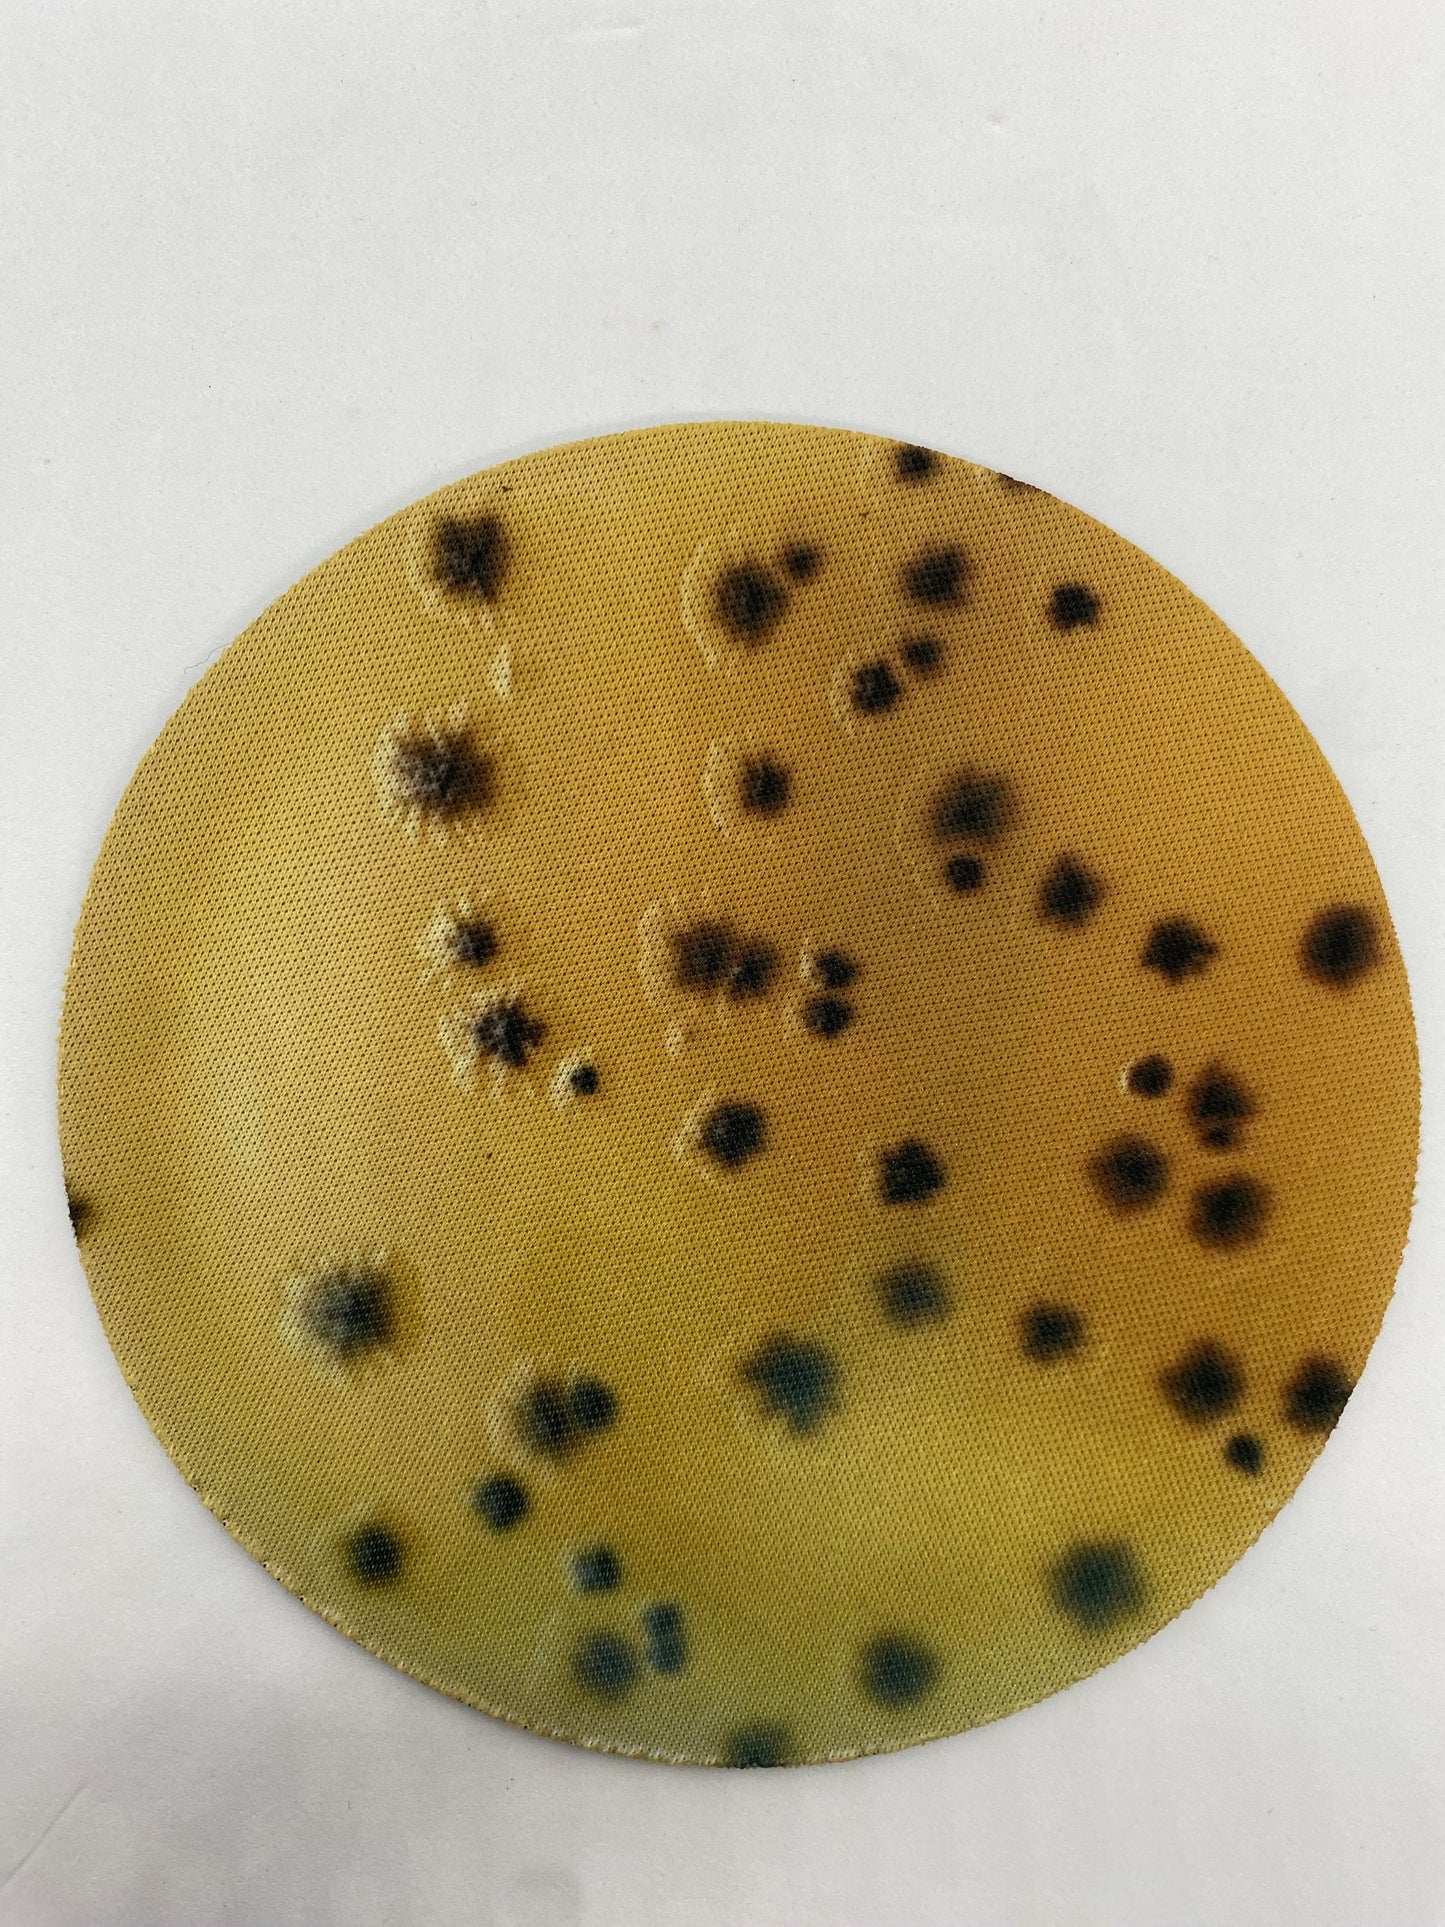 Bacterial Pathogen Neoprene Coasters - Terrible Pathogen, Petri Dish | Fun Gift for Microbiologists, Infectious Disease, Teachers, Lab Techs